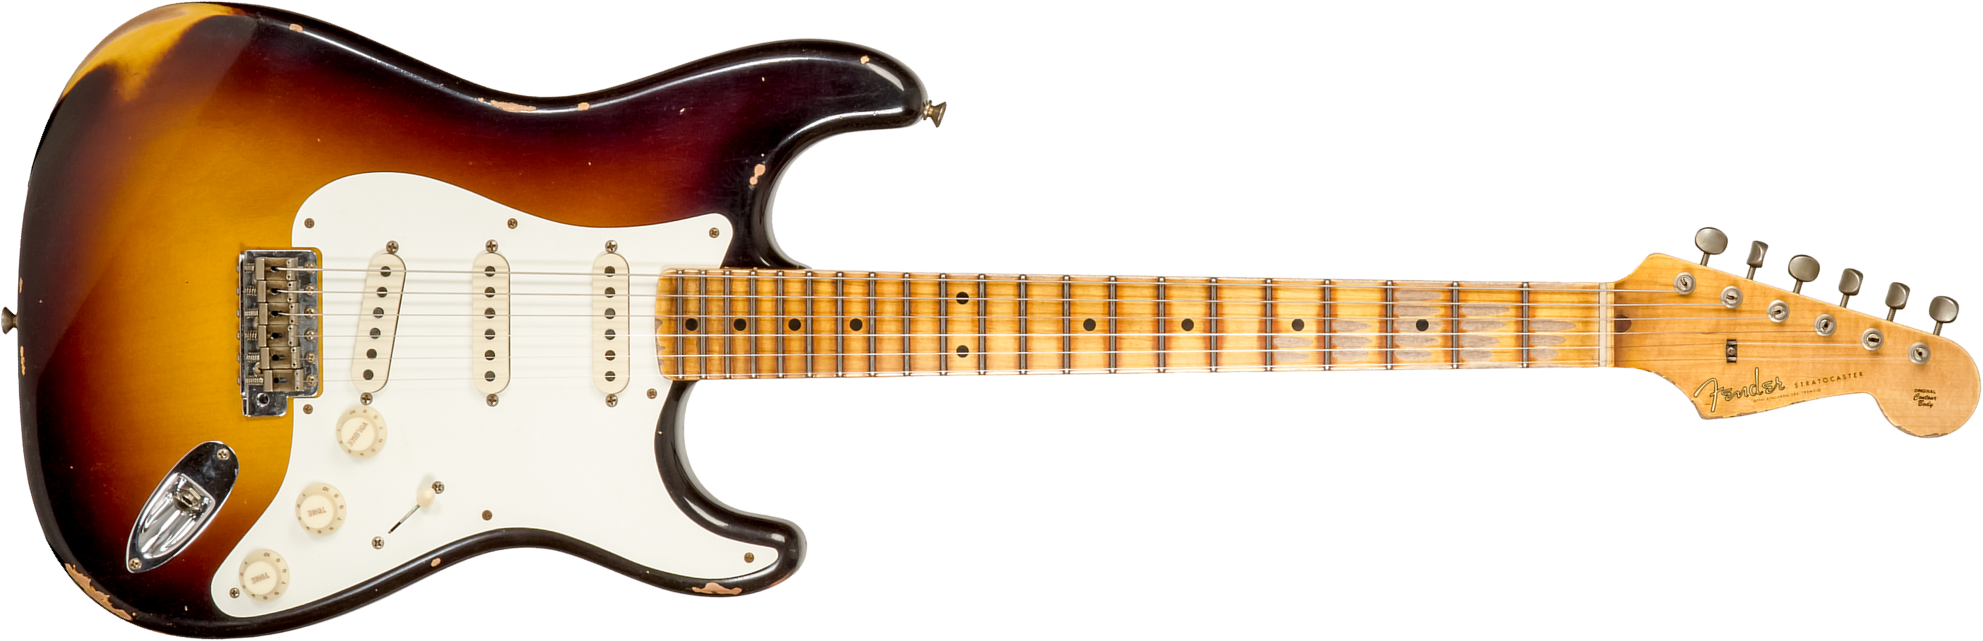 Fender Custom Shop Strat 1957 3s Trem Mn #cz575421 - Relic 2-color Sunburst - E-Gitarre in Str-Form - Main picture